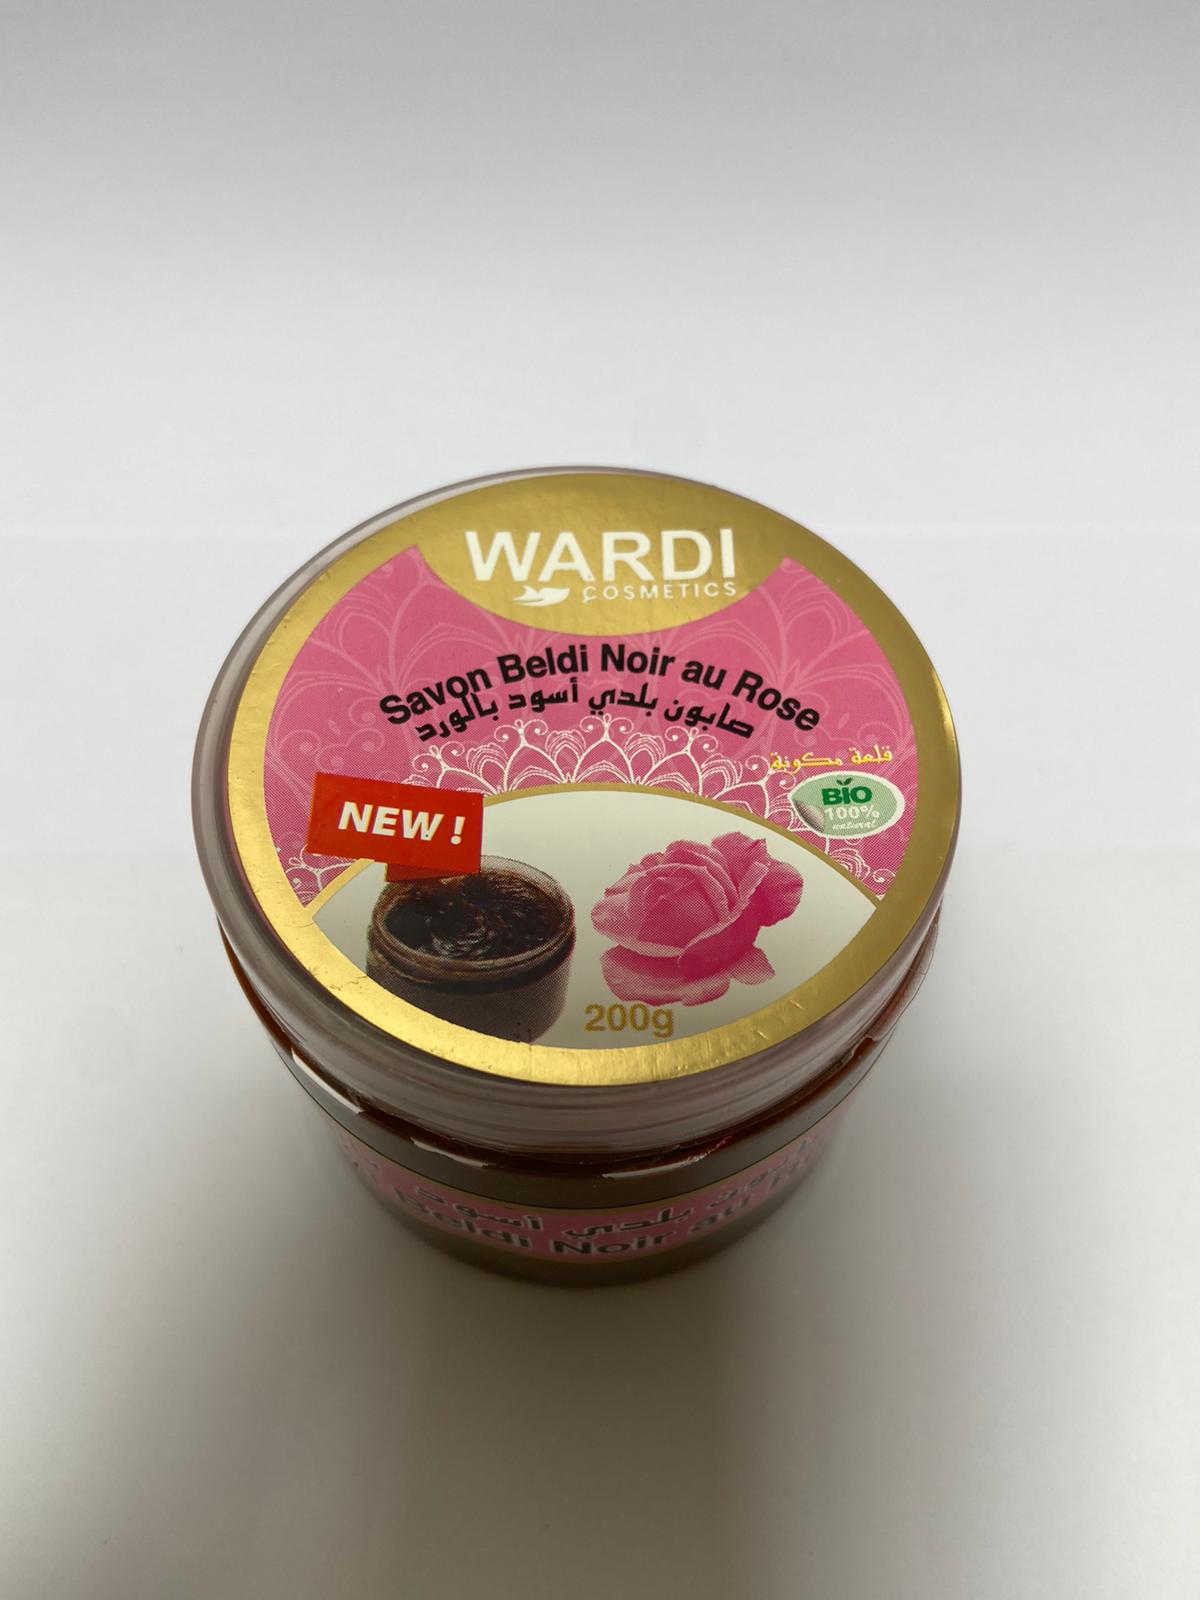 WARDI Cosmetics - Savon beldi noir à la rose - 200g - Wardi Cosmetics - Ethni Beauty Market